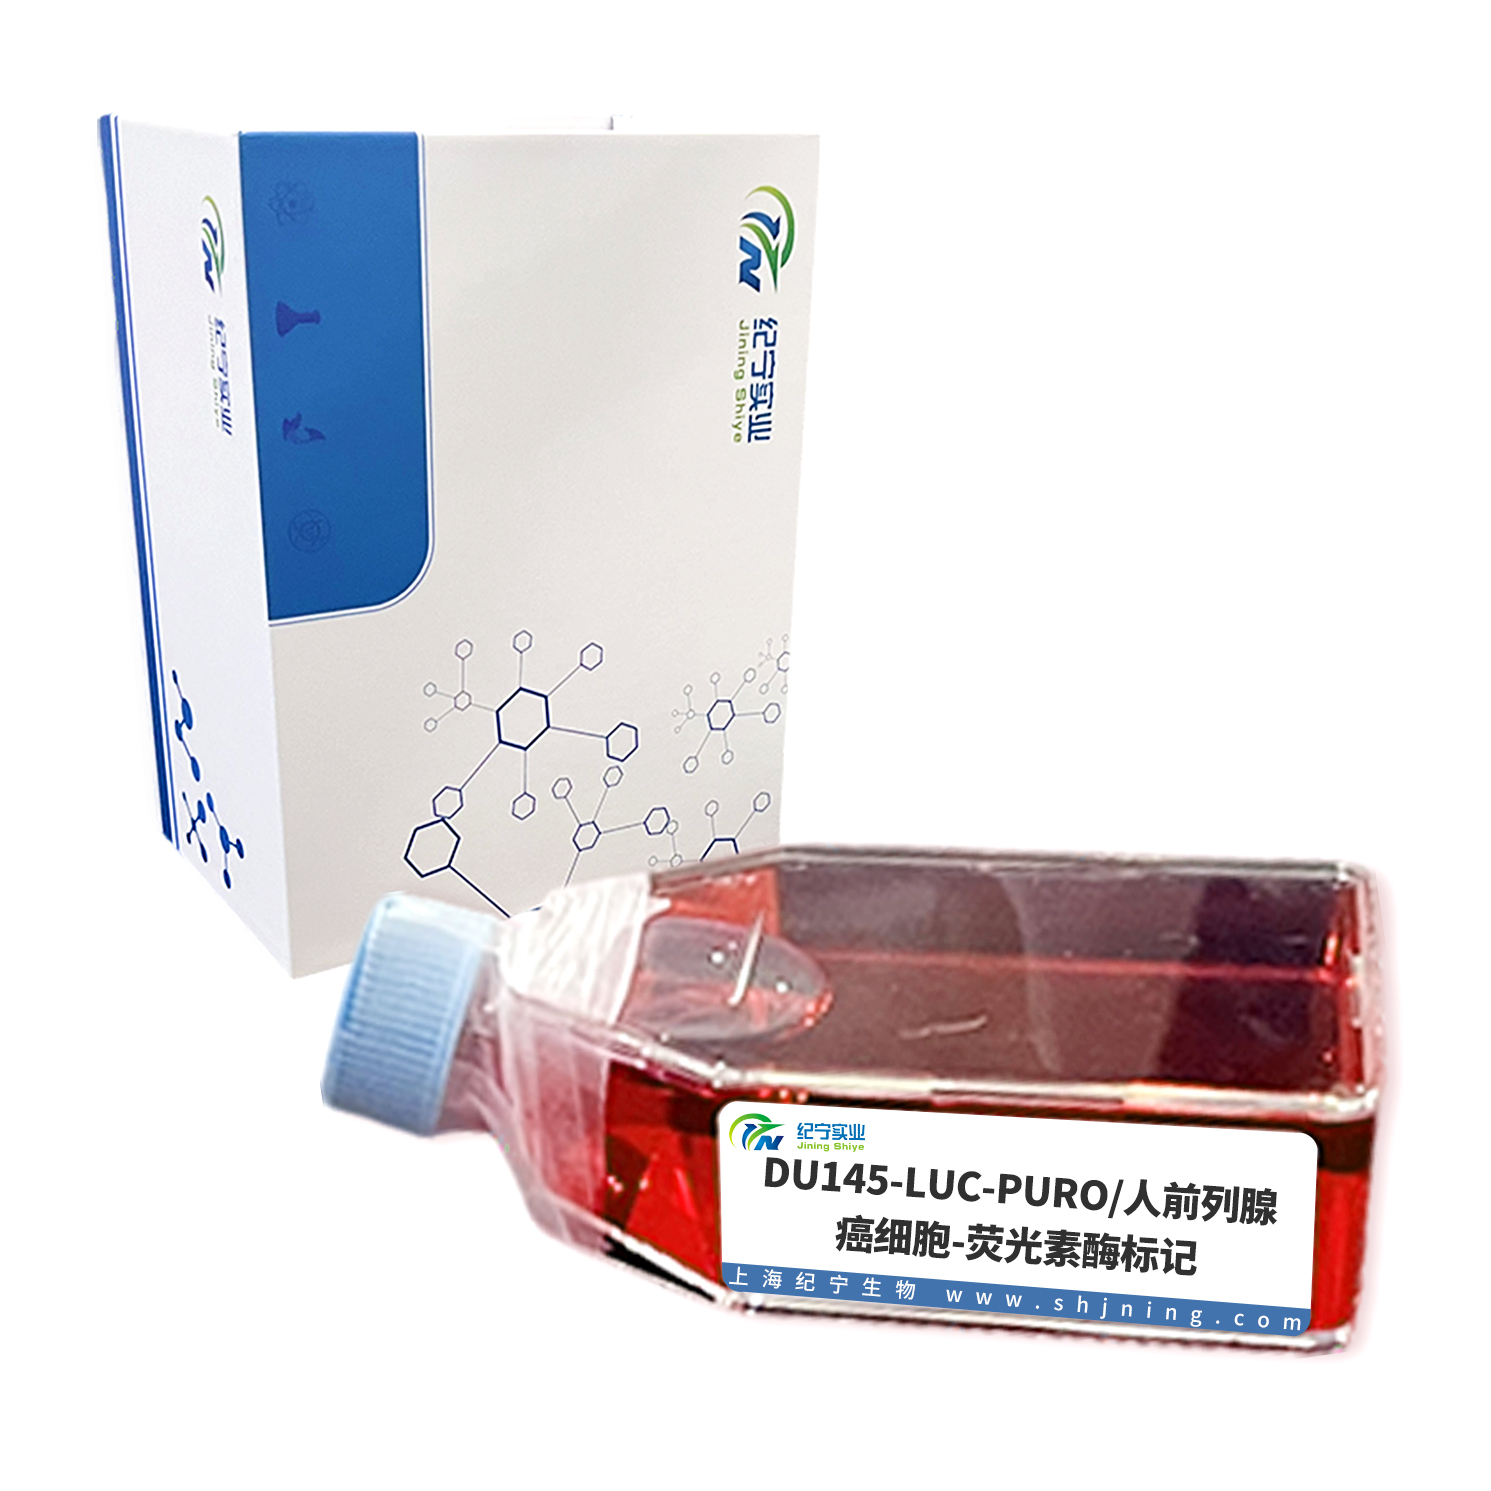 DU145-LUC-PURO/人前列腺癌细胞-荧光素酶标记